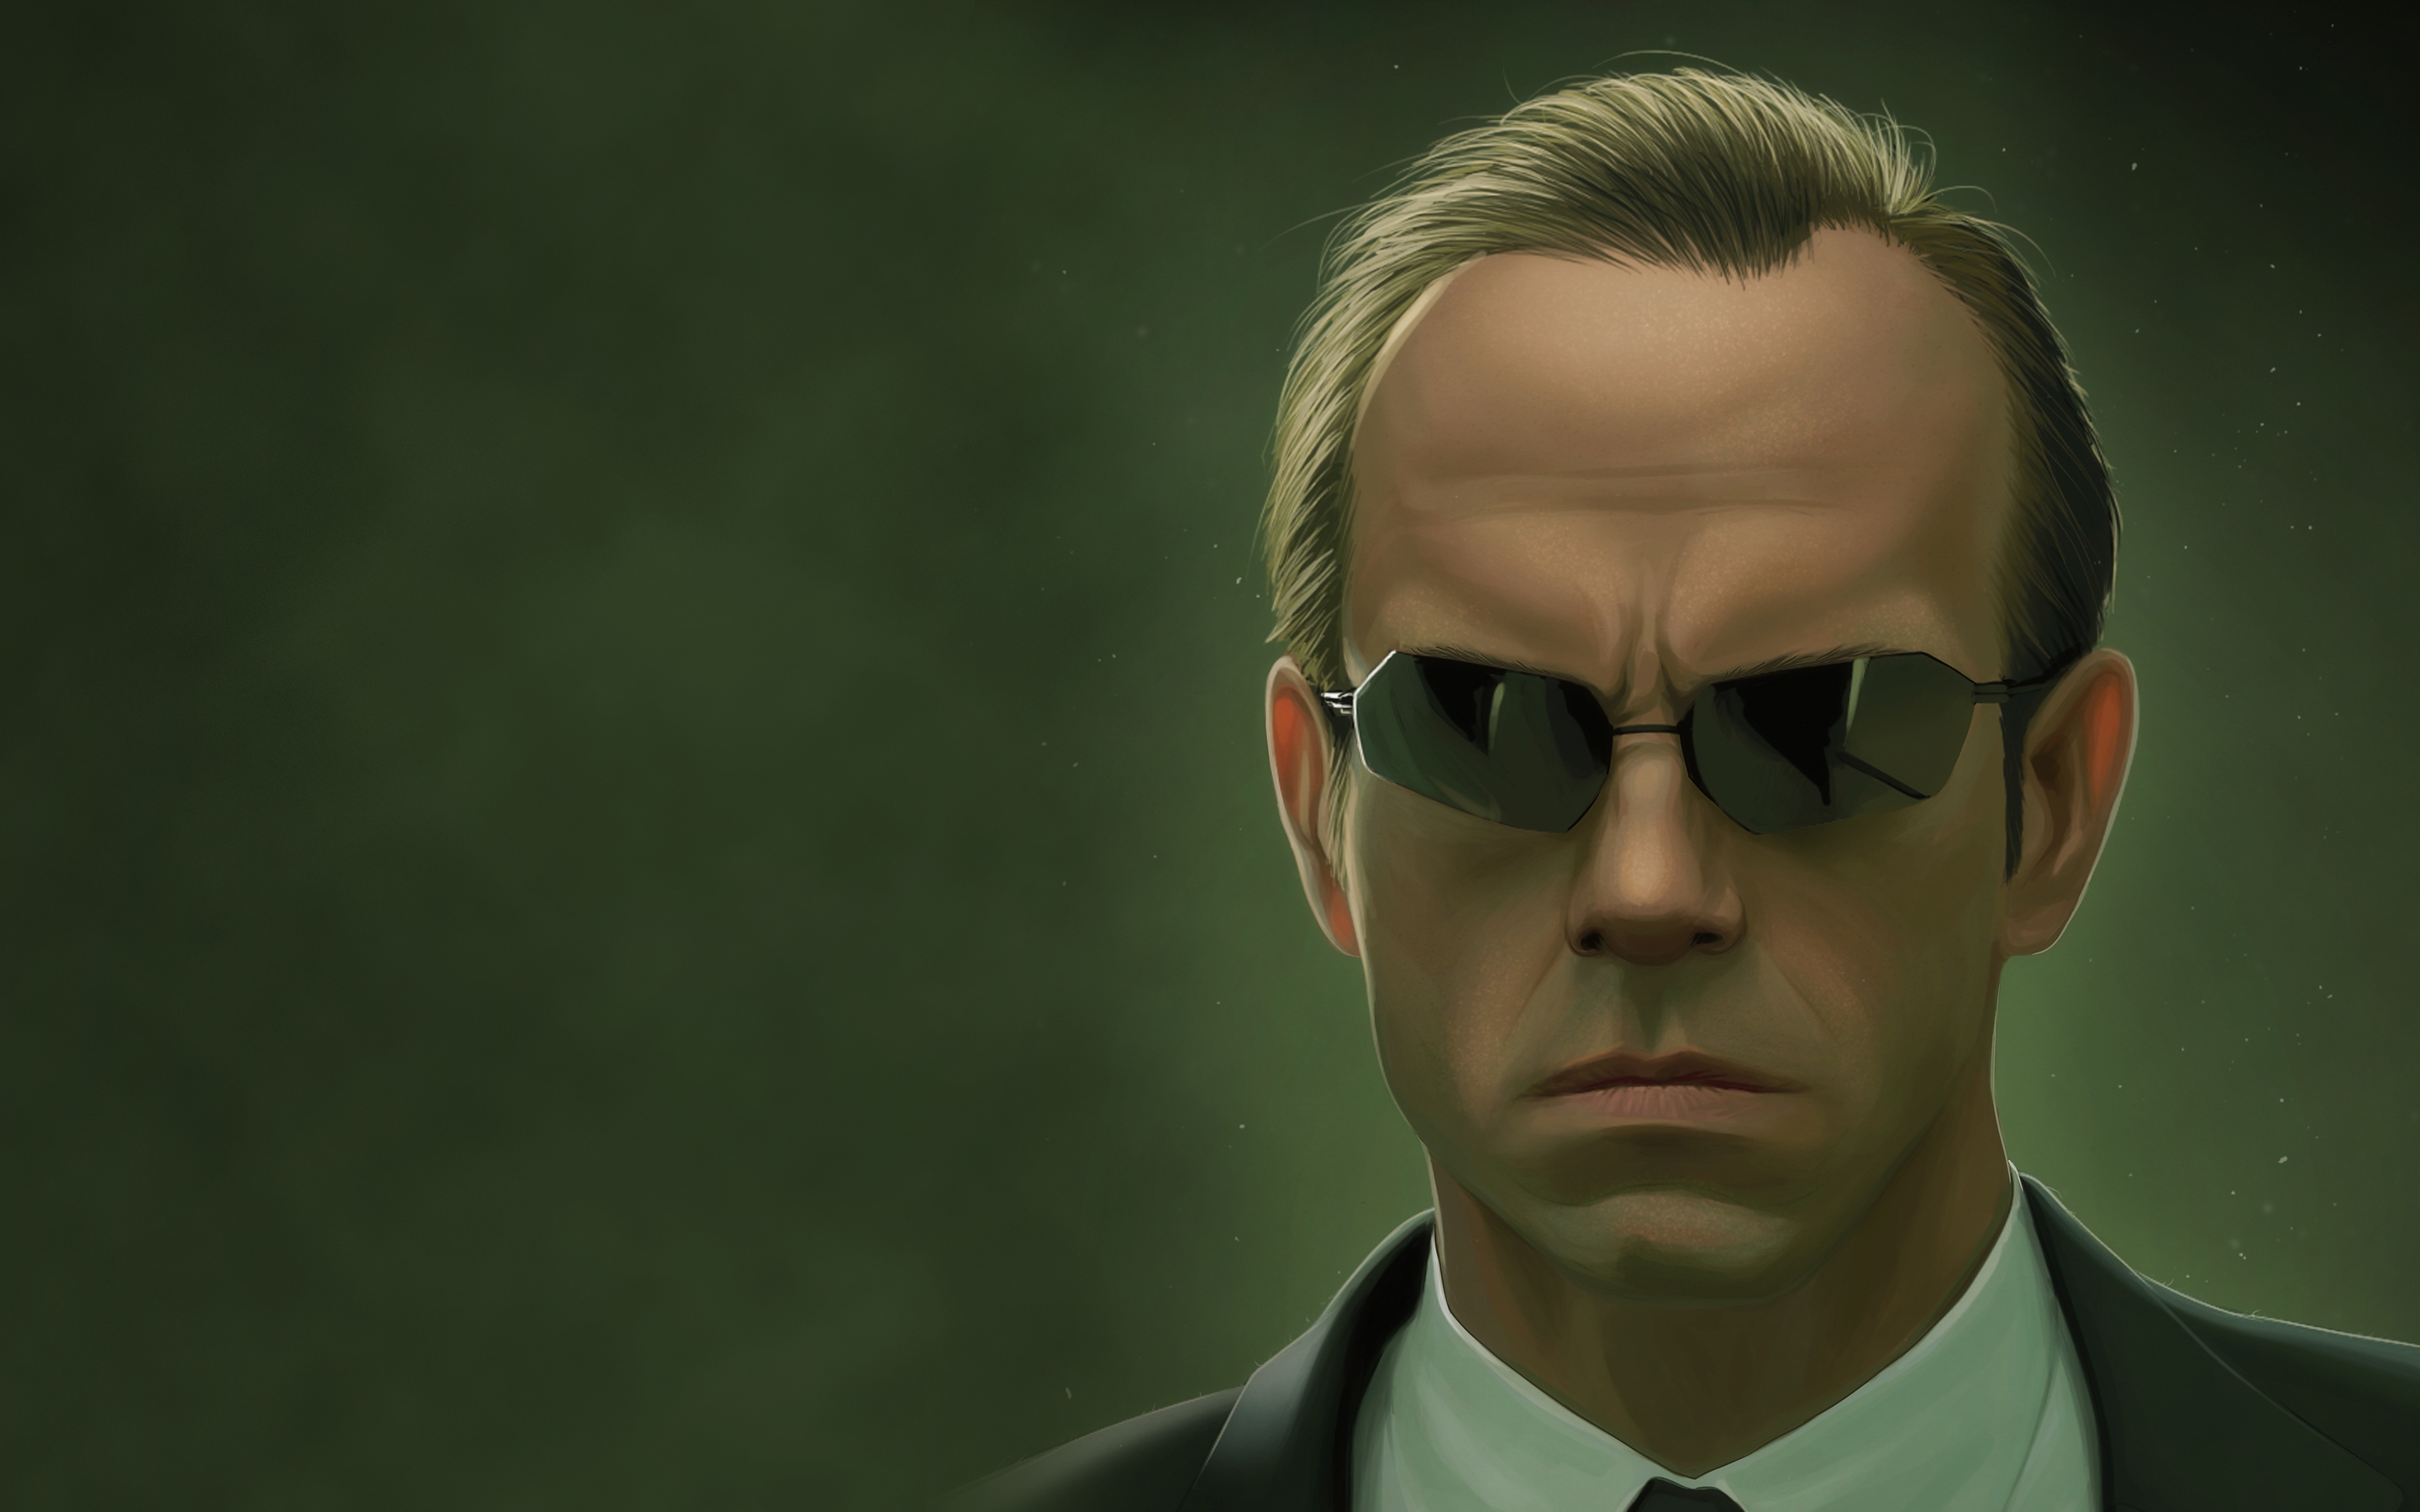 The Matrix Agent Smith for 2880 x 1800 Retina Display resolution